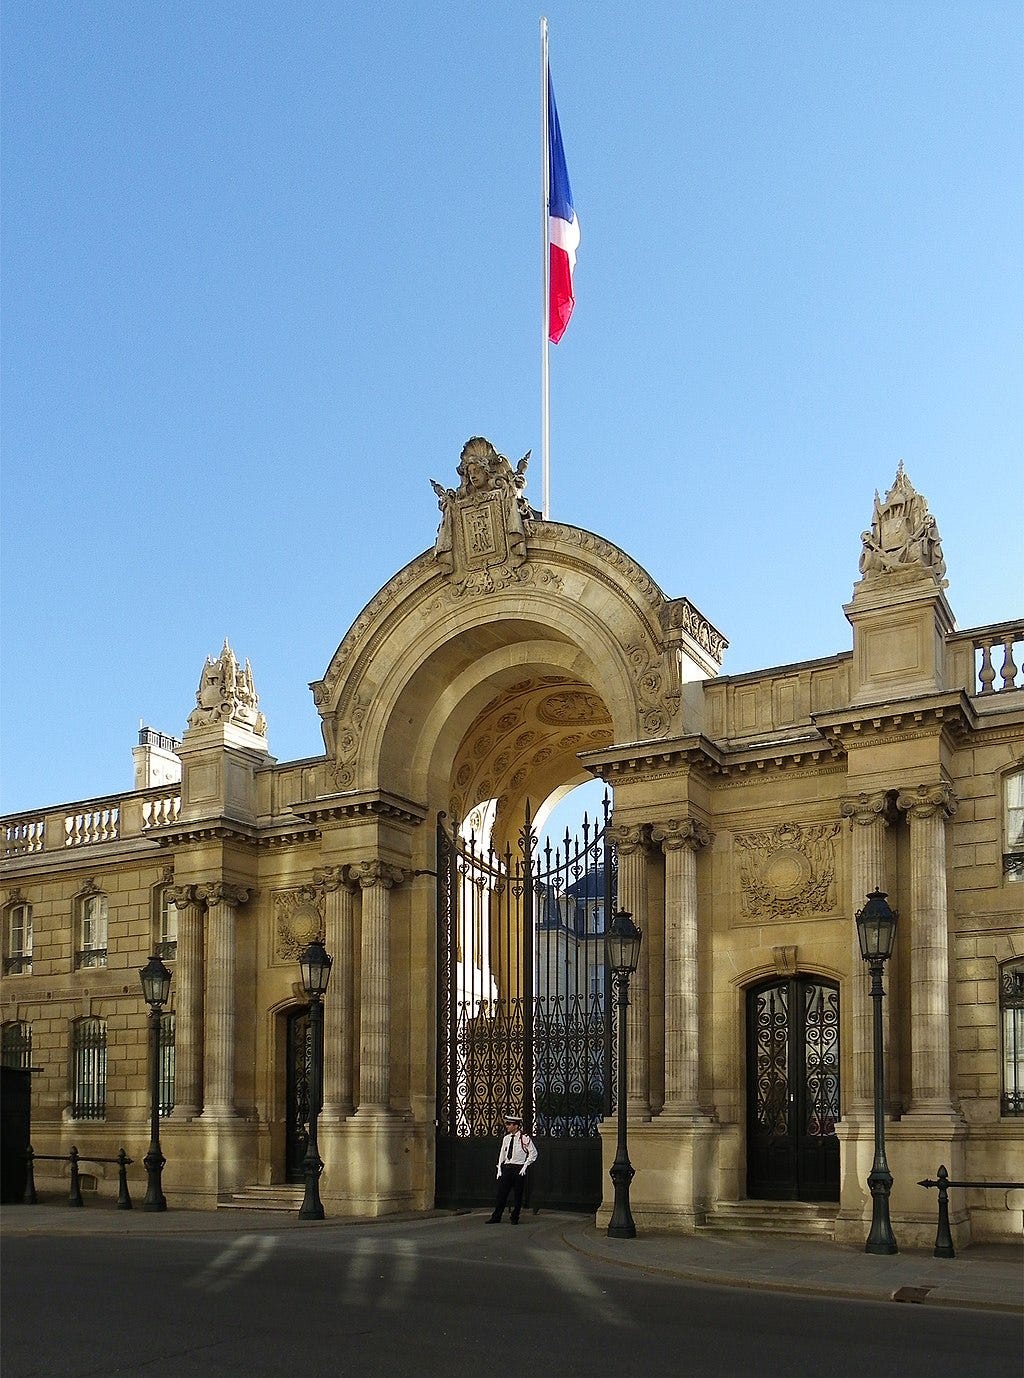 The entrance gate of the Elysée Palace (Image: Erwmat, CC BY-SA 3.0, via Wikimedia Commons)